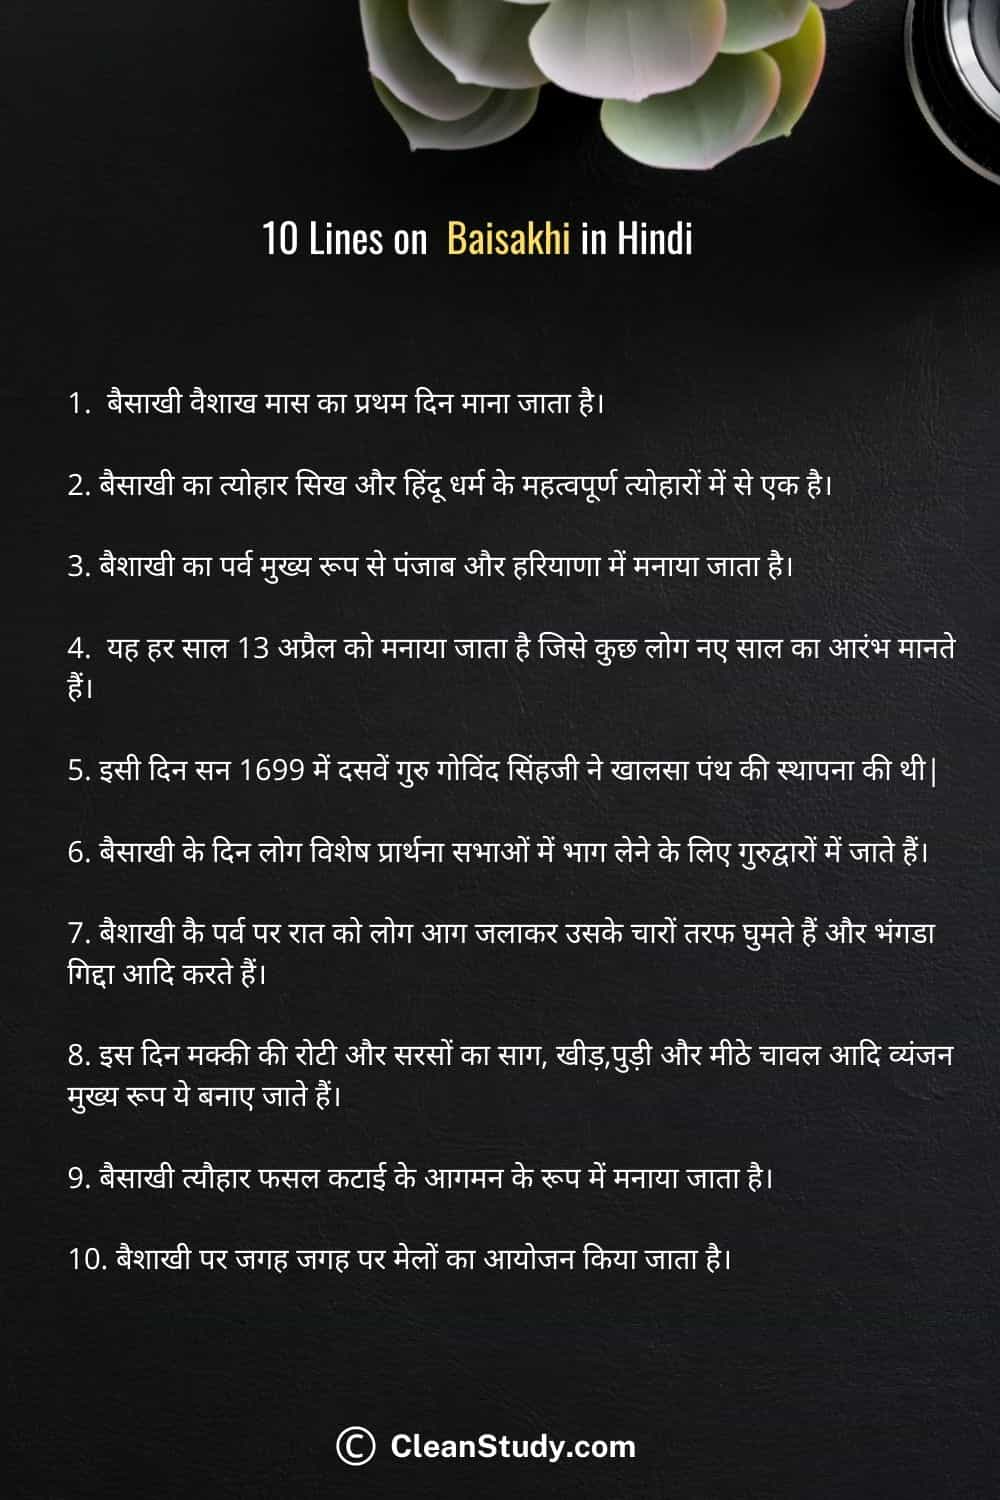 10 Lines on Baisakhi in Hindi